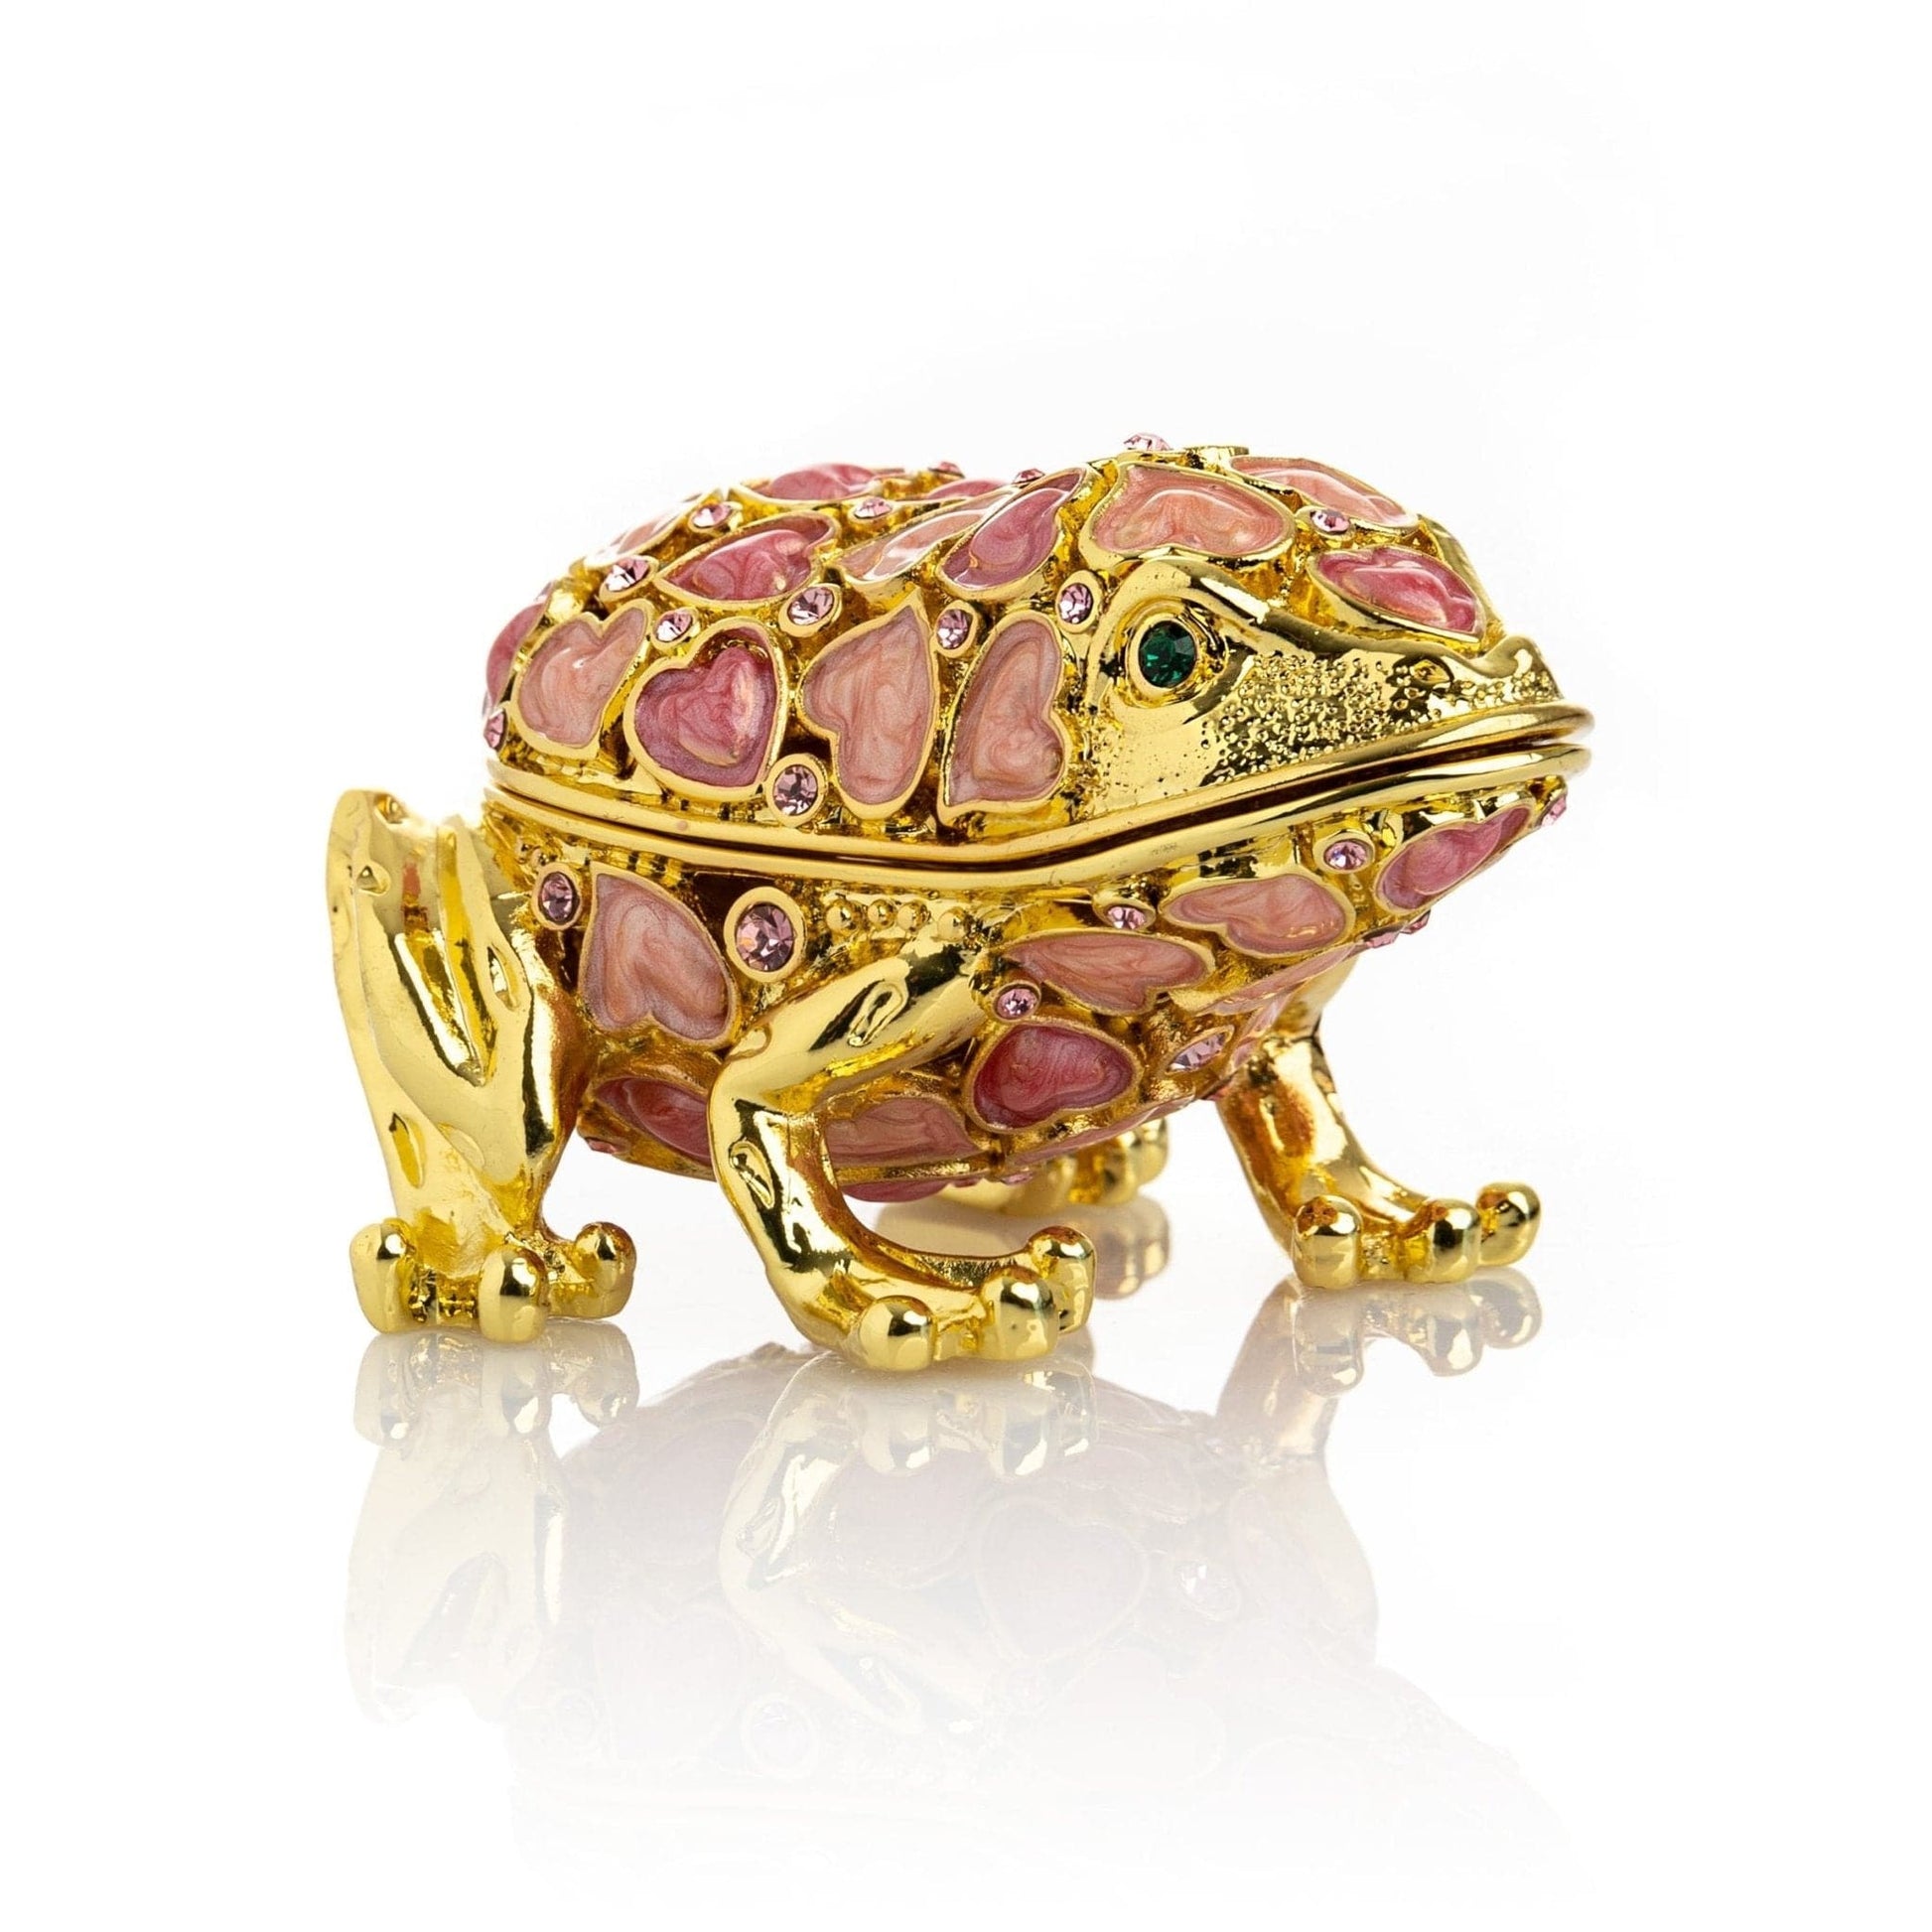 Golden Frog with Hearts | Treasures of my HeART